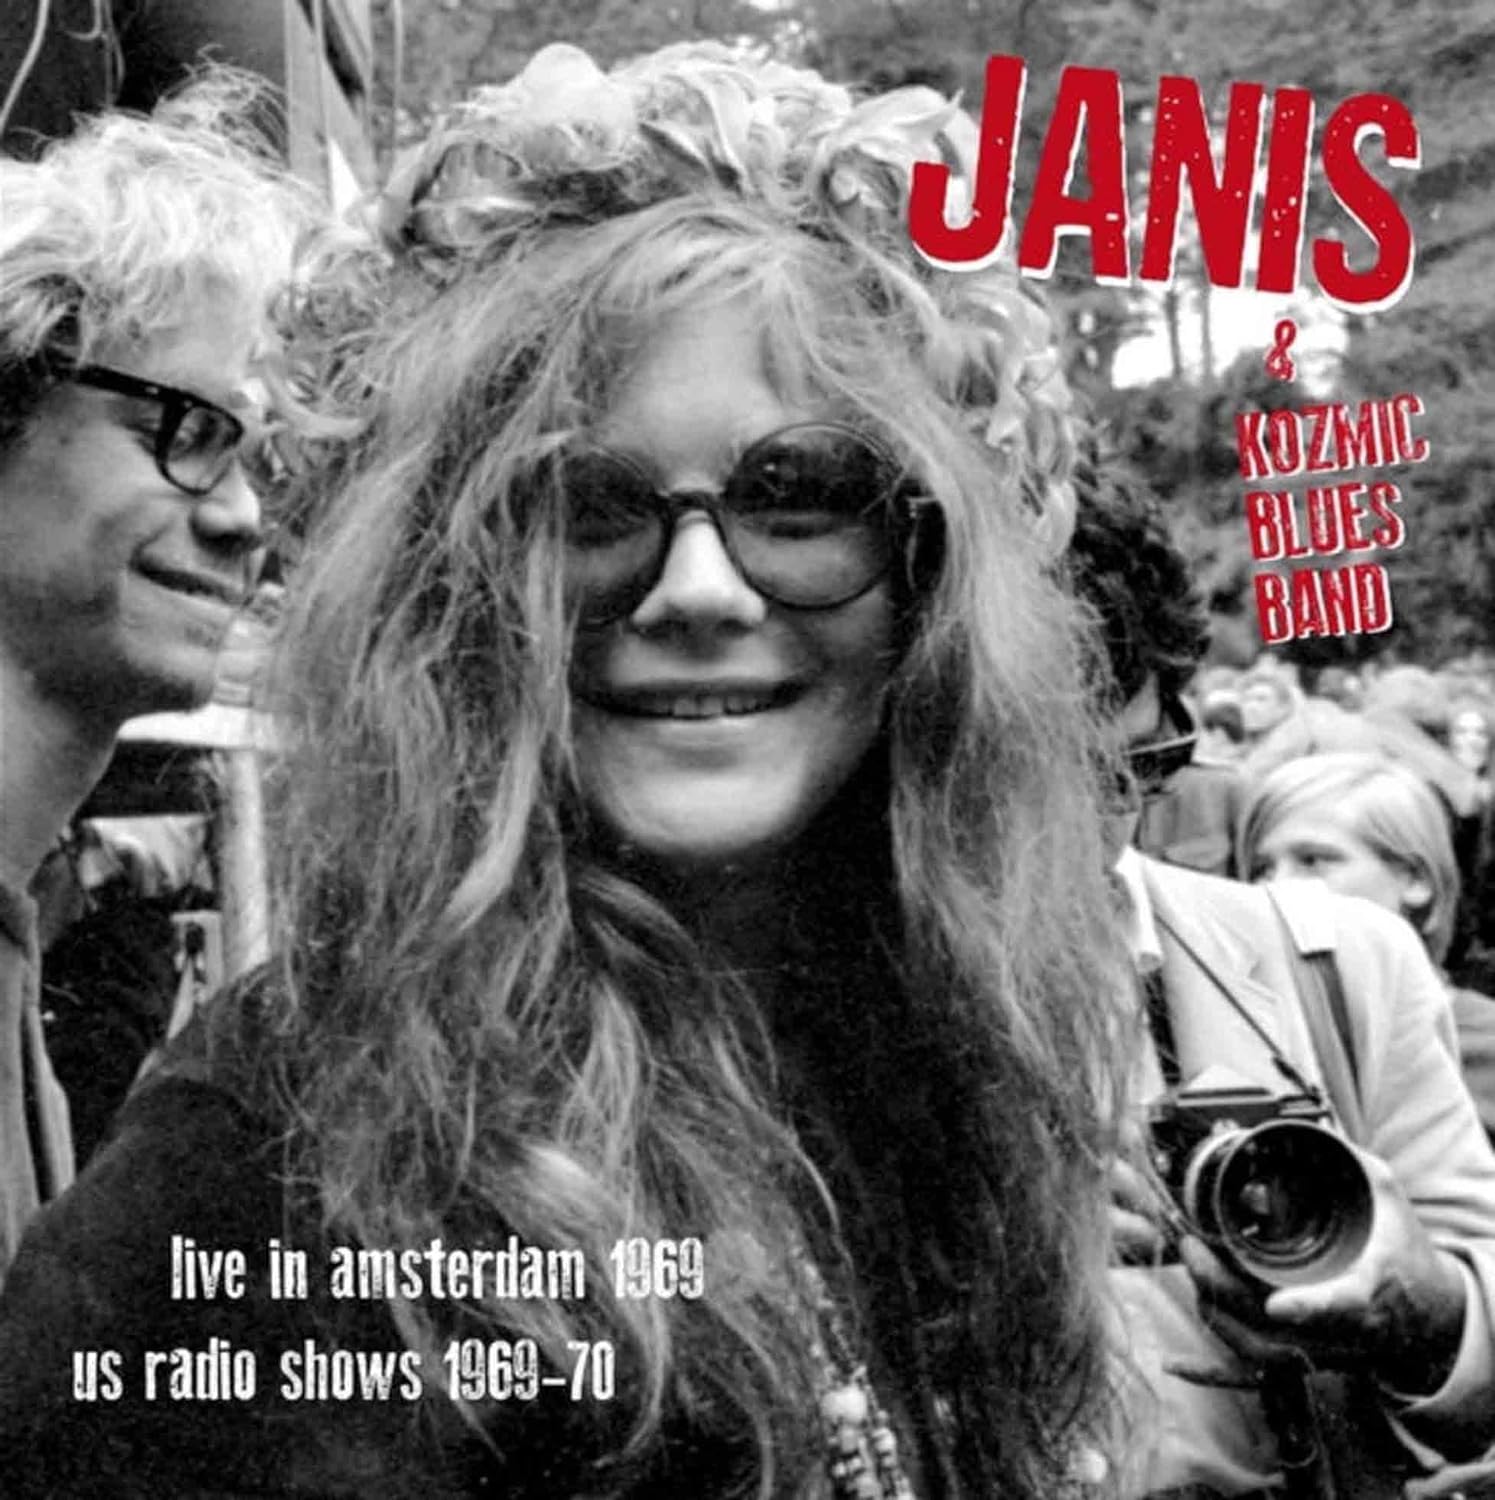 Janis* & Kozmic Blues Band – Live In Amsterdam 1969, US Radio Shows 1969-70